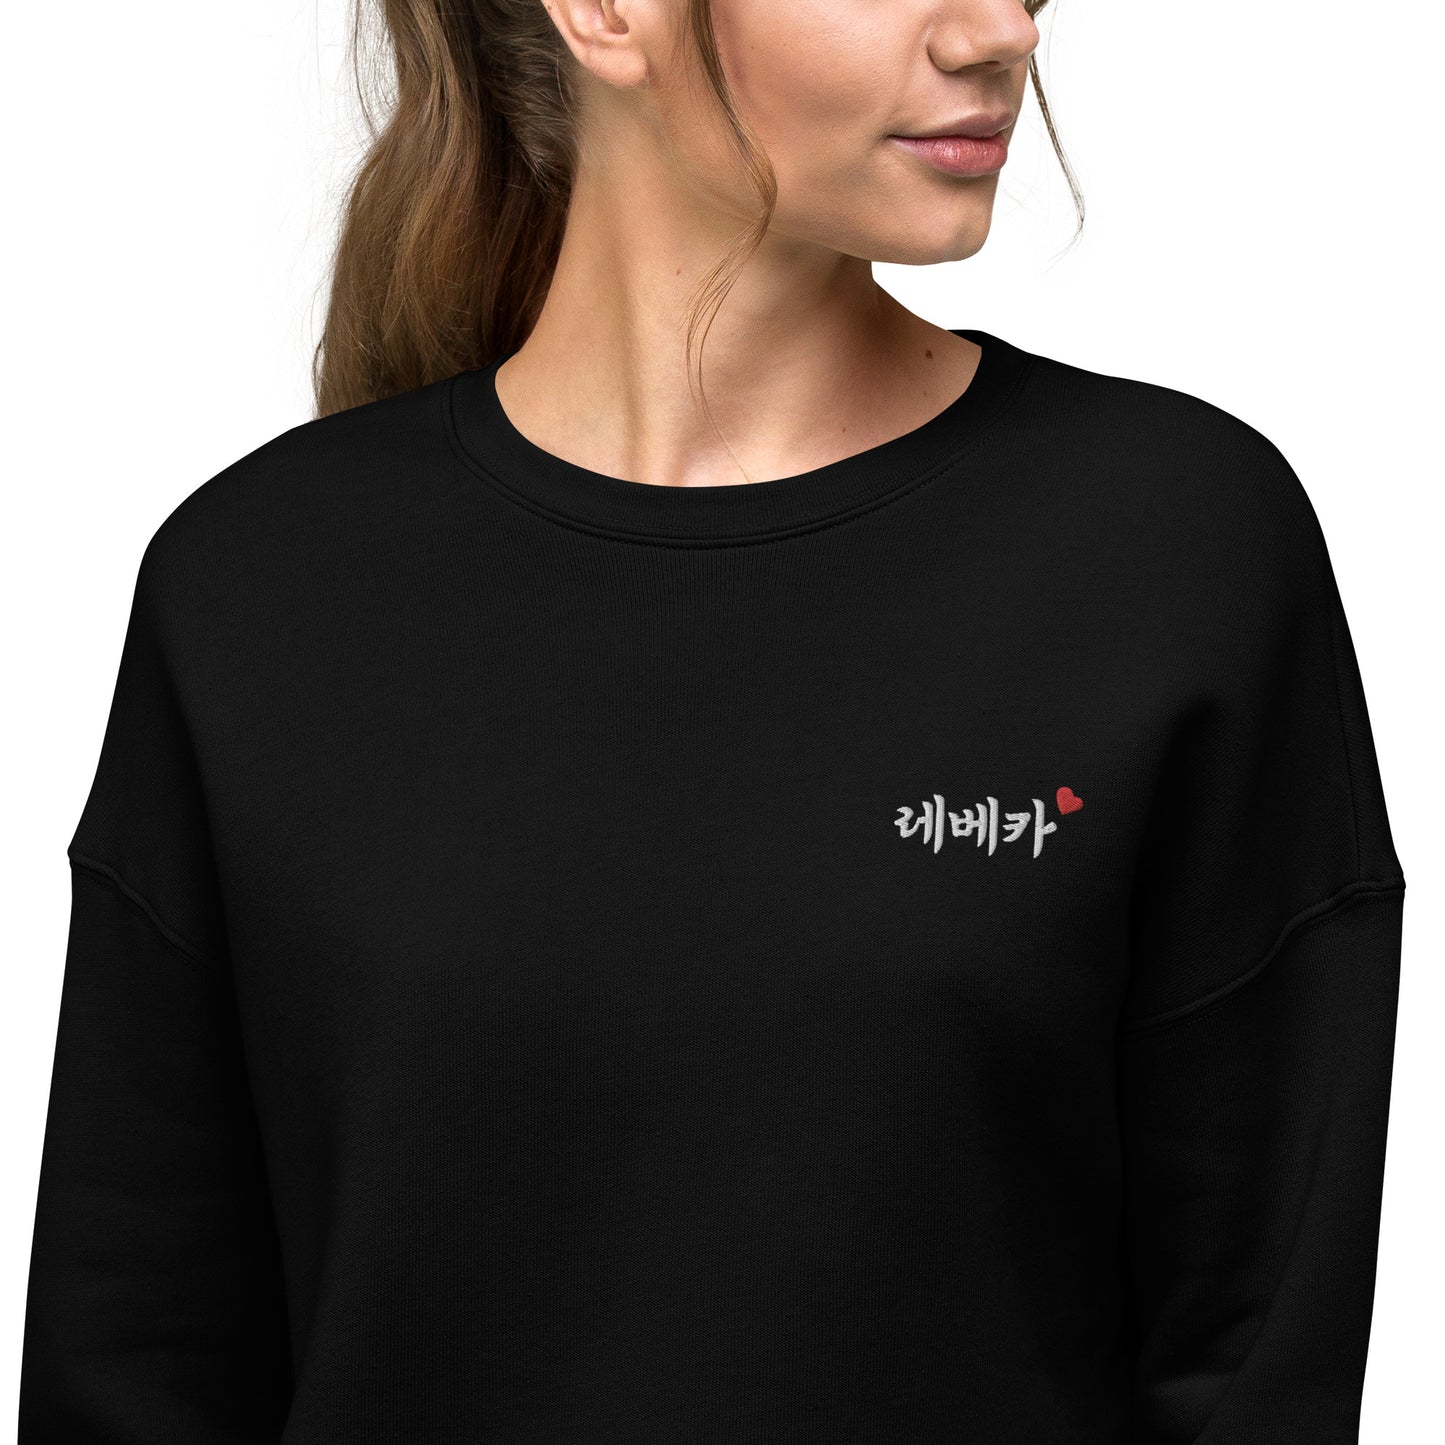 Rebecca Korean Name Embroidery Women's Cropped Sweatshirt